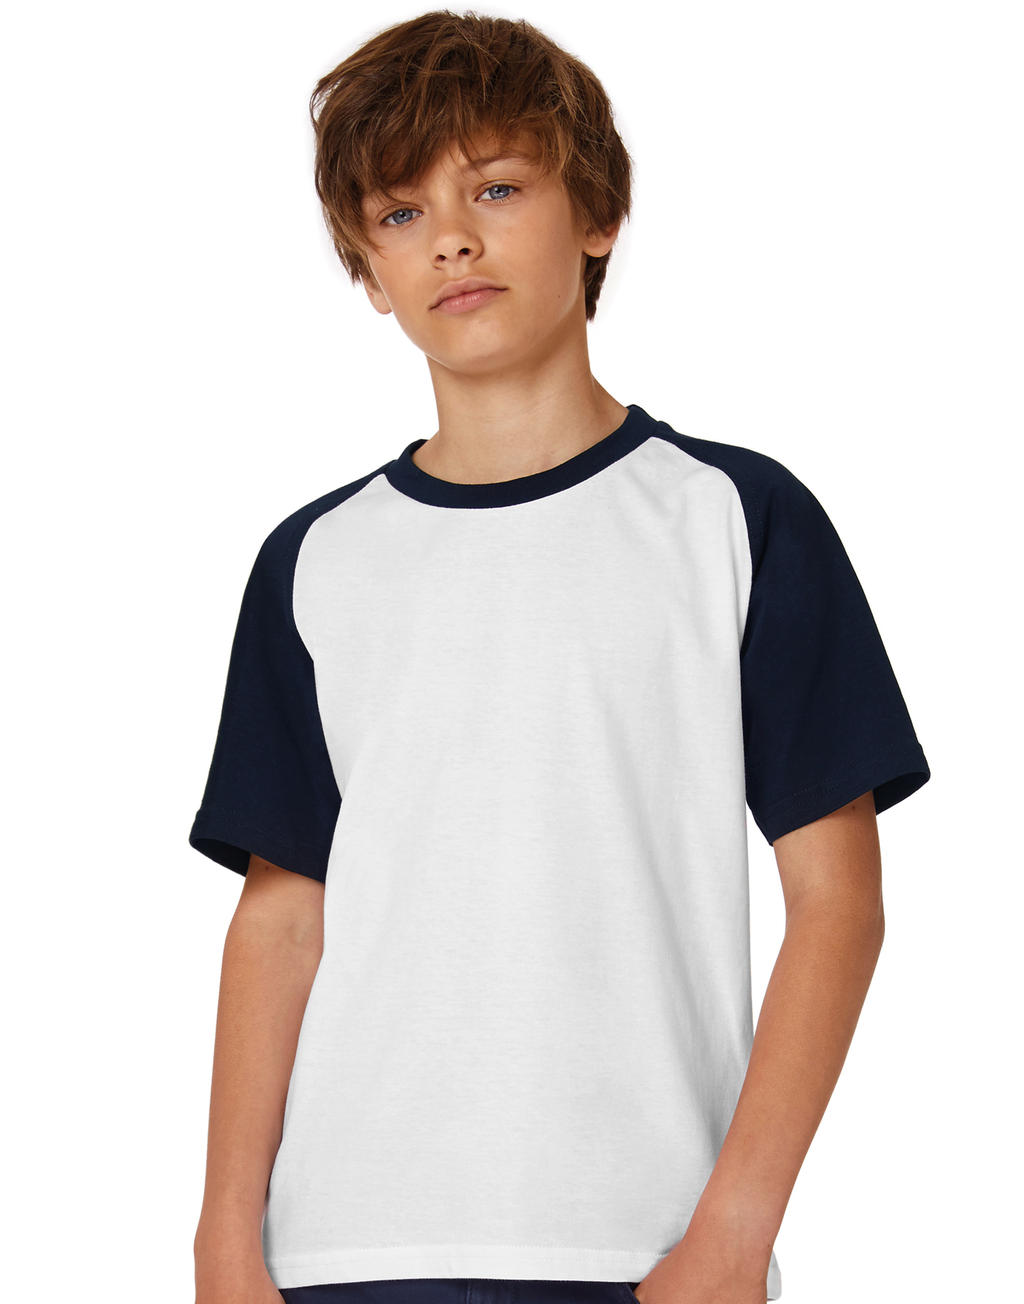 B&C TK350 Kinder Baseball-T-Shirt kaufen | Basic-Shirts